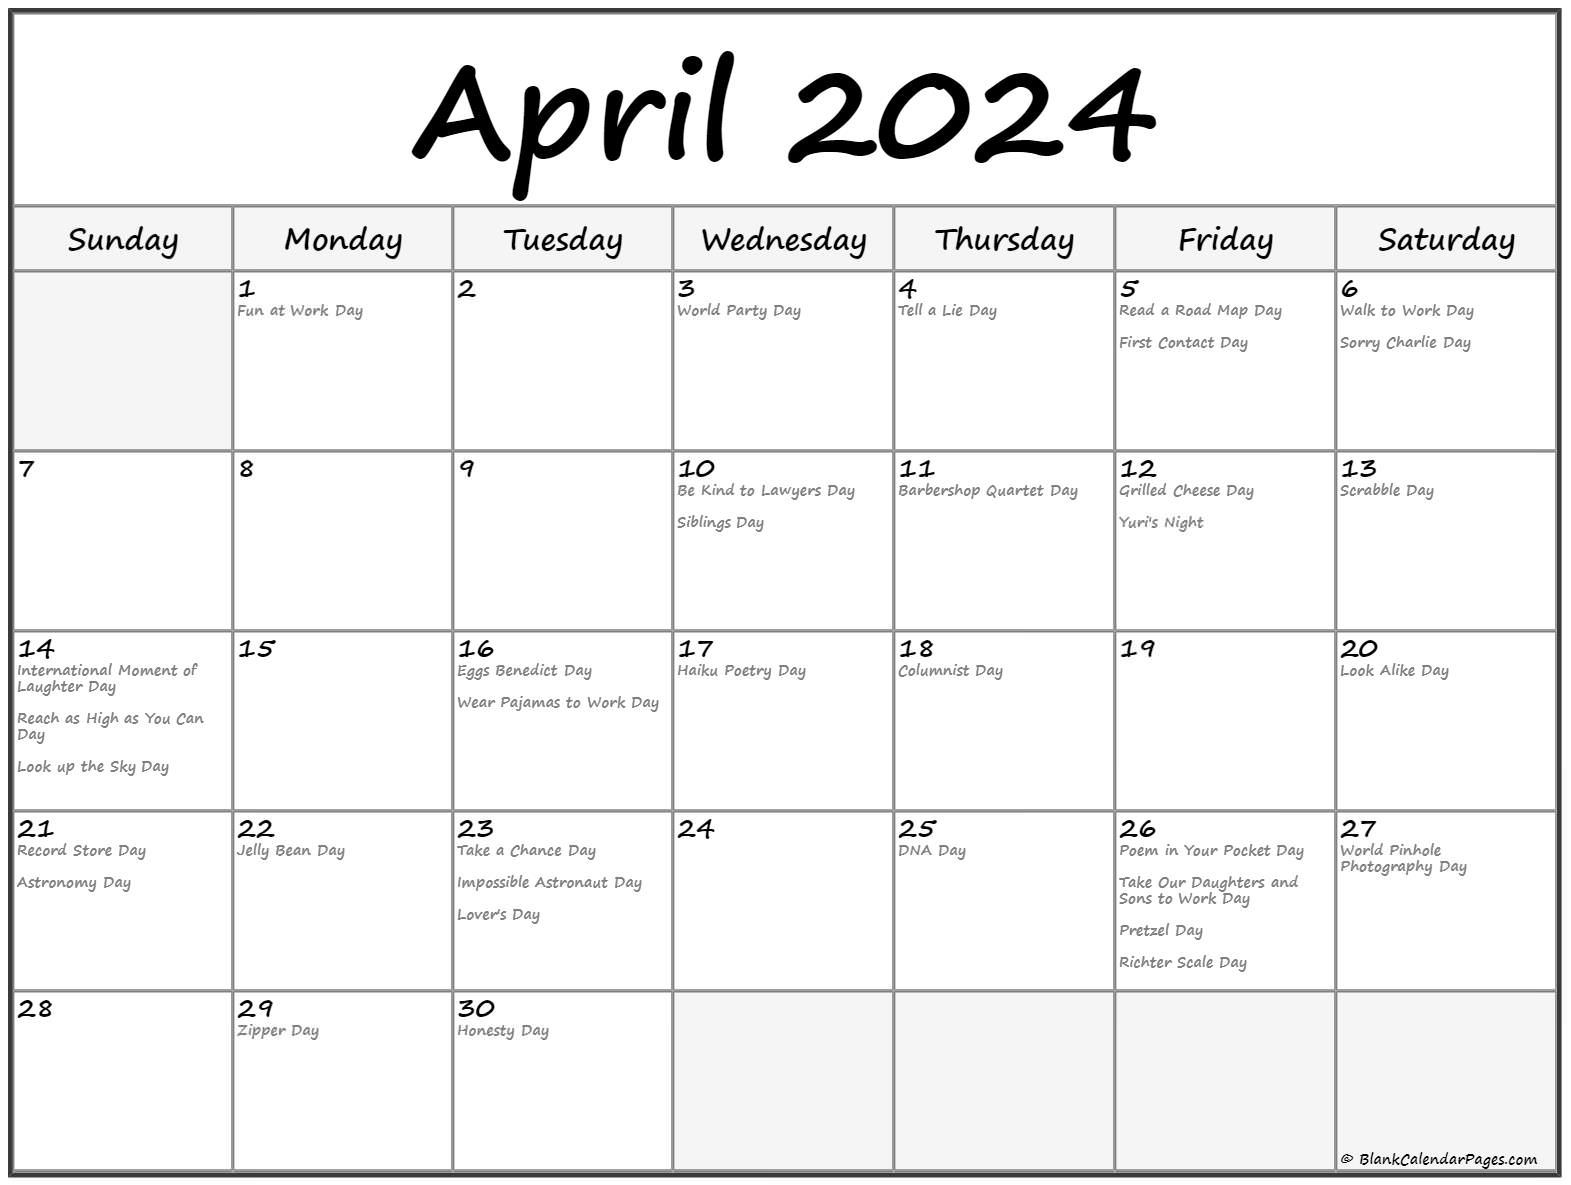 Easter Holiday 2023 Dates Qld Public Holiday Calendar 2023 Qld Get Calendar 2023 Update Get